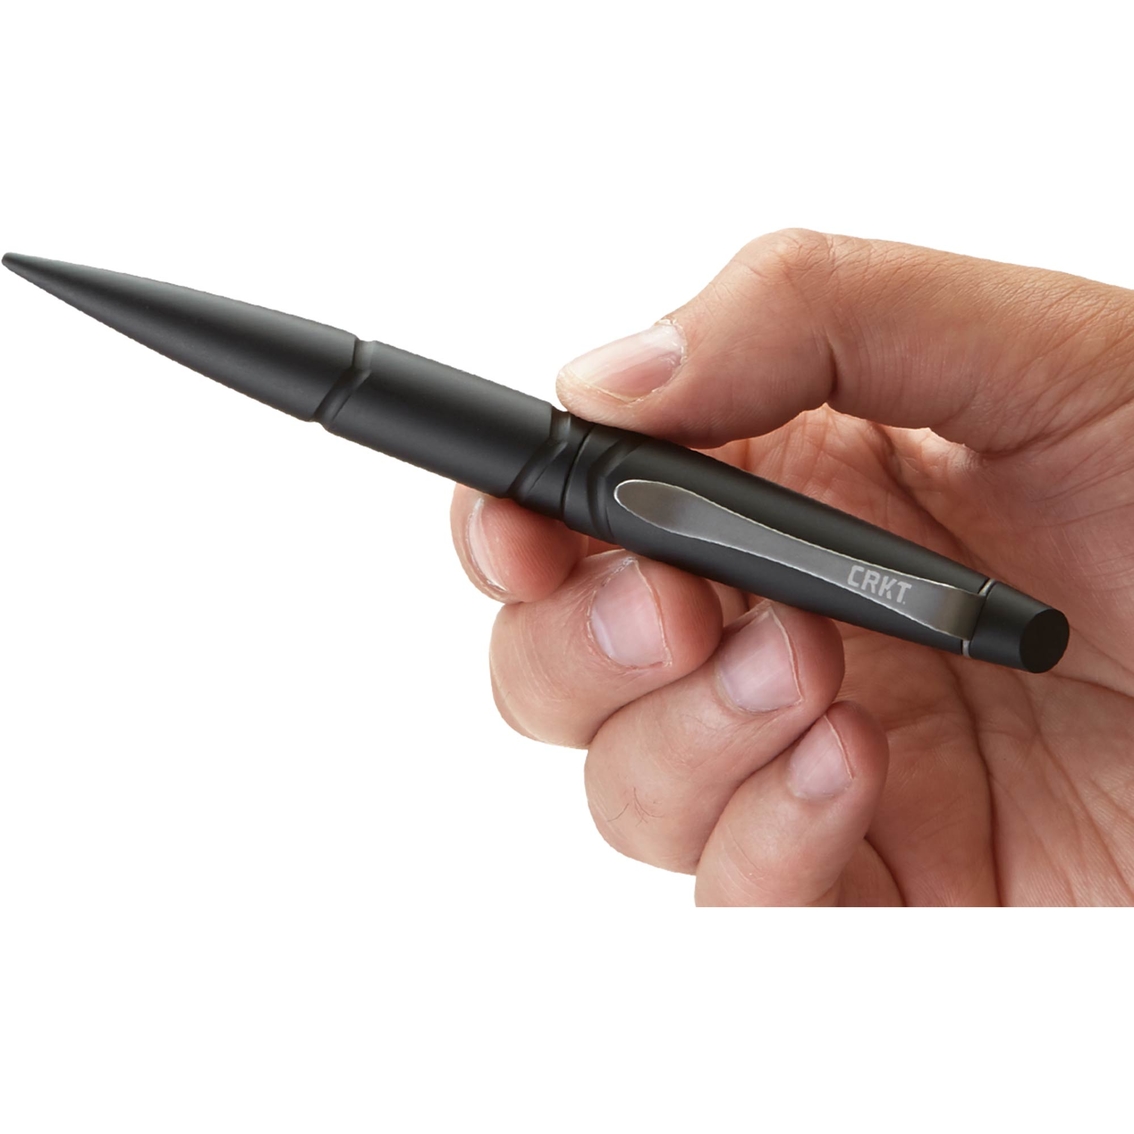 Columbia River Knife & Tool Williams Tactical Pen II - Image 4 of 4